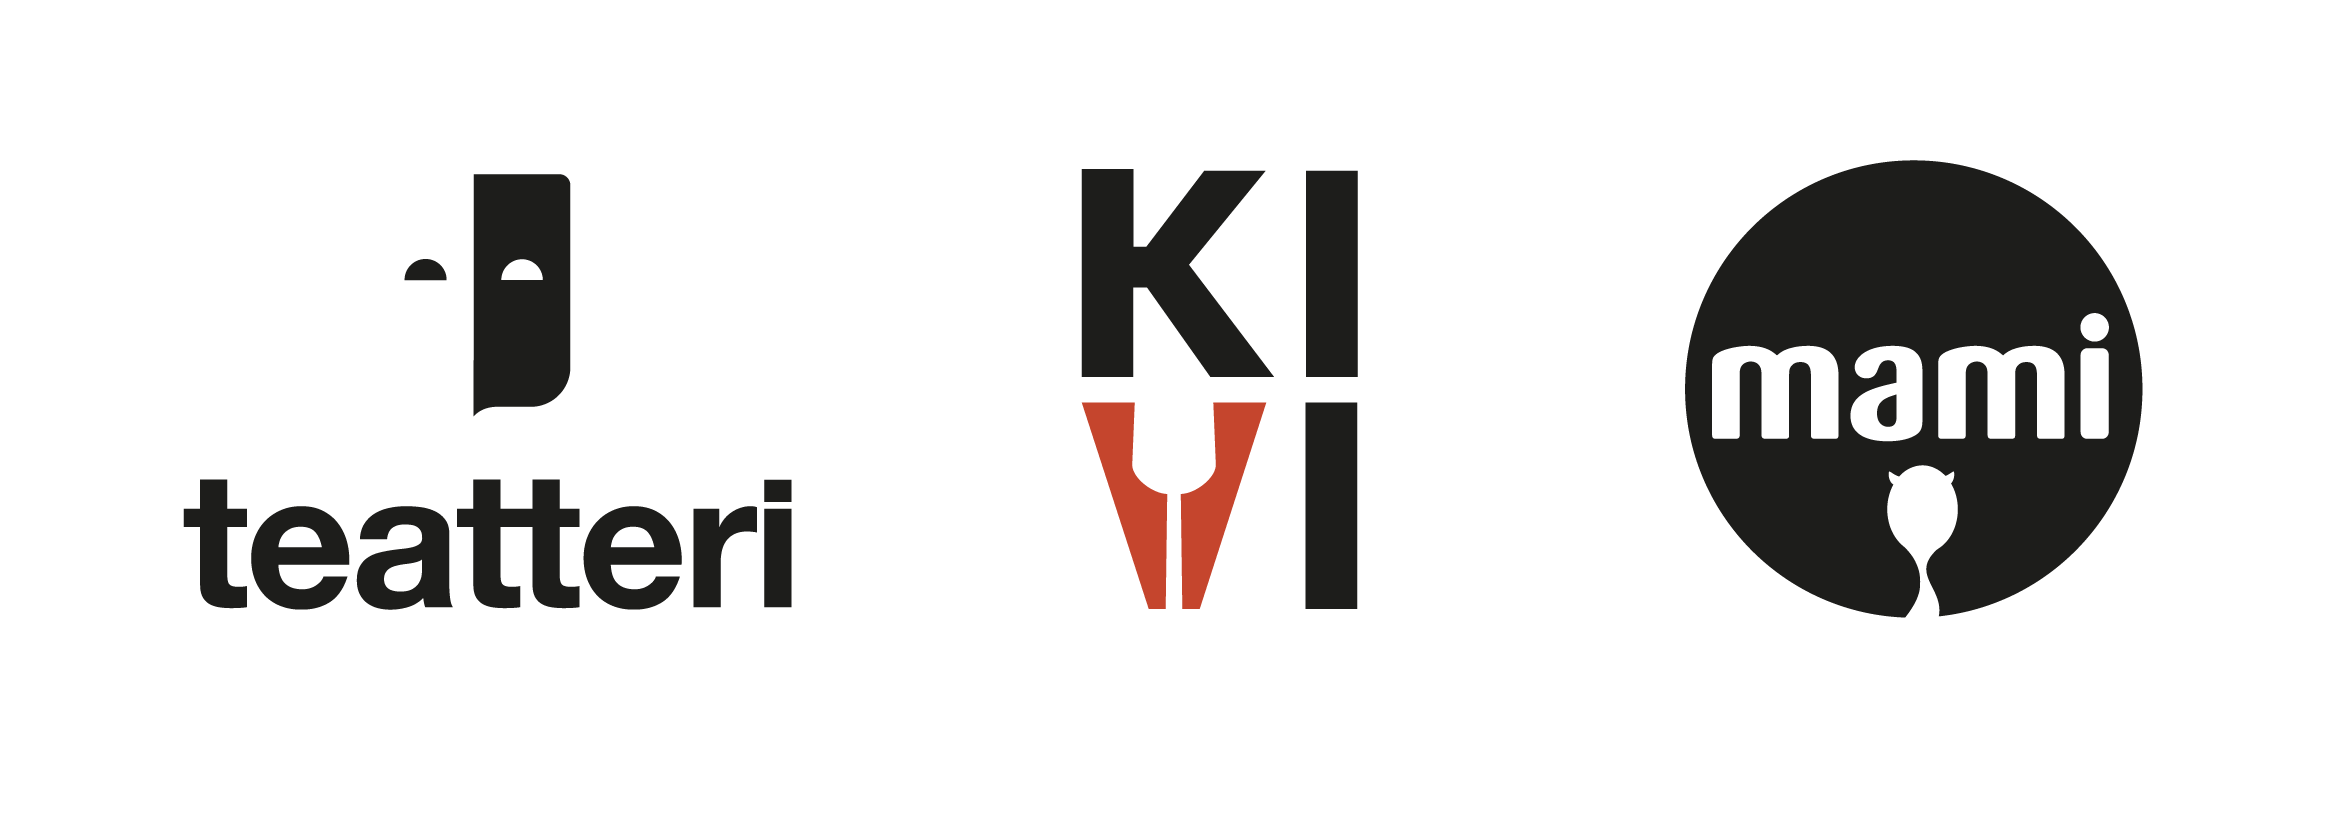 Kivi_logo_Marita Koivisto